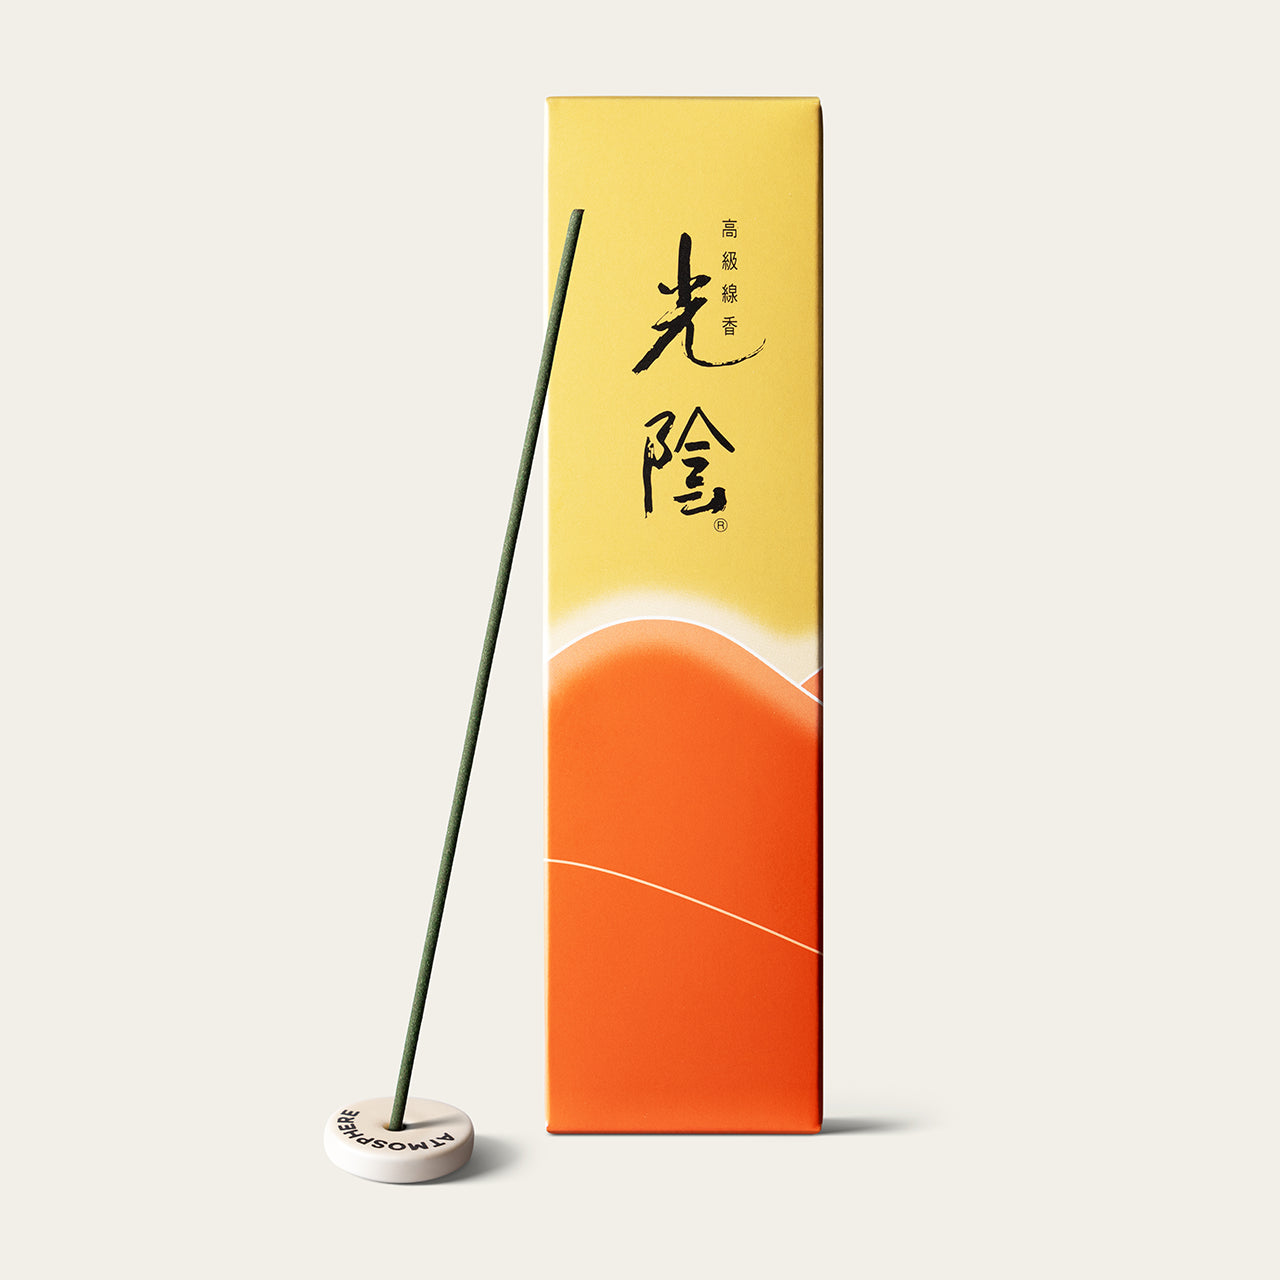 Gyokushodo Koin Light and Shadow Japanese incense sticks (25 sticks) with Atmosphere ceramic incense holder